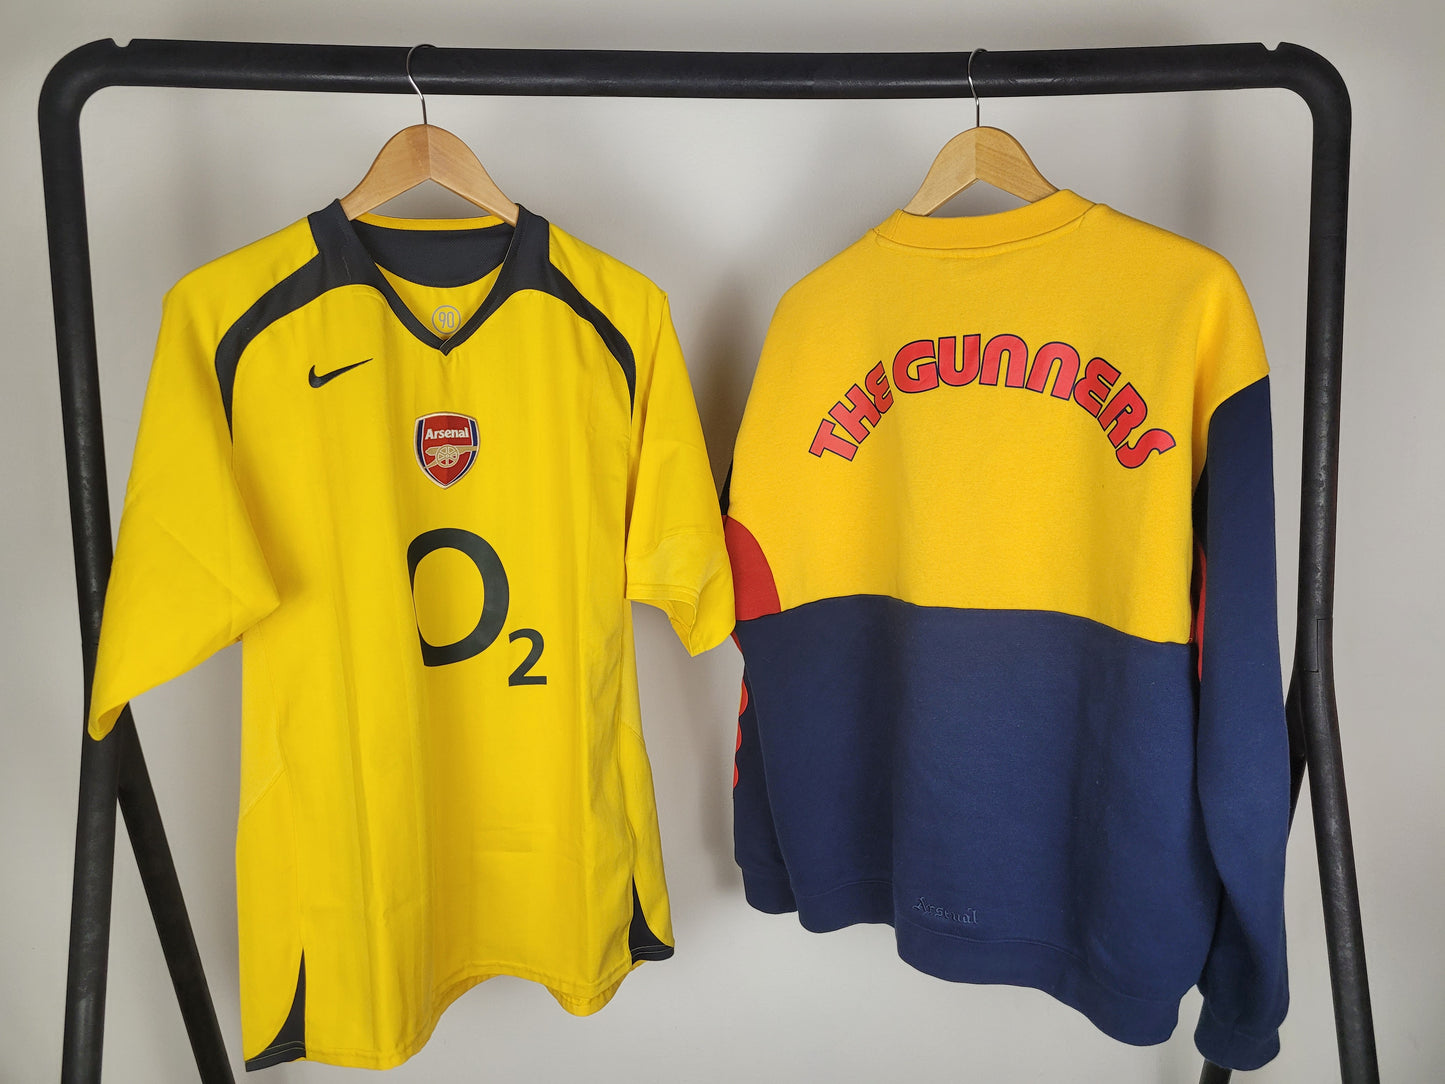 
                  
                    Arsenal 2005-2006 Away Jersey  x  Adidas Retro Sweater 2021
                  
                